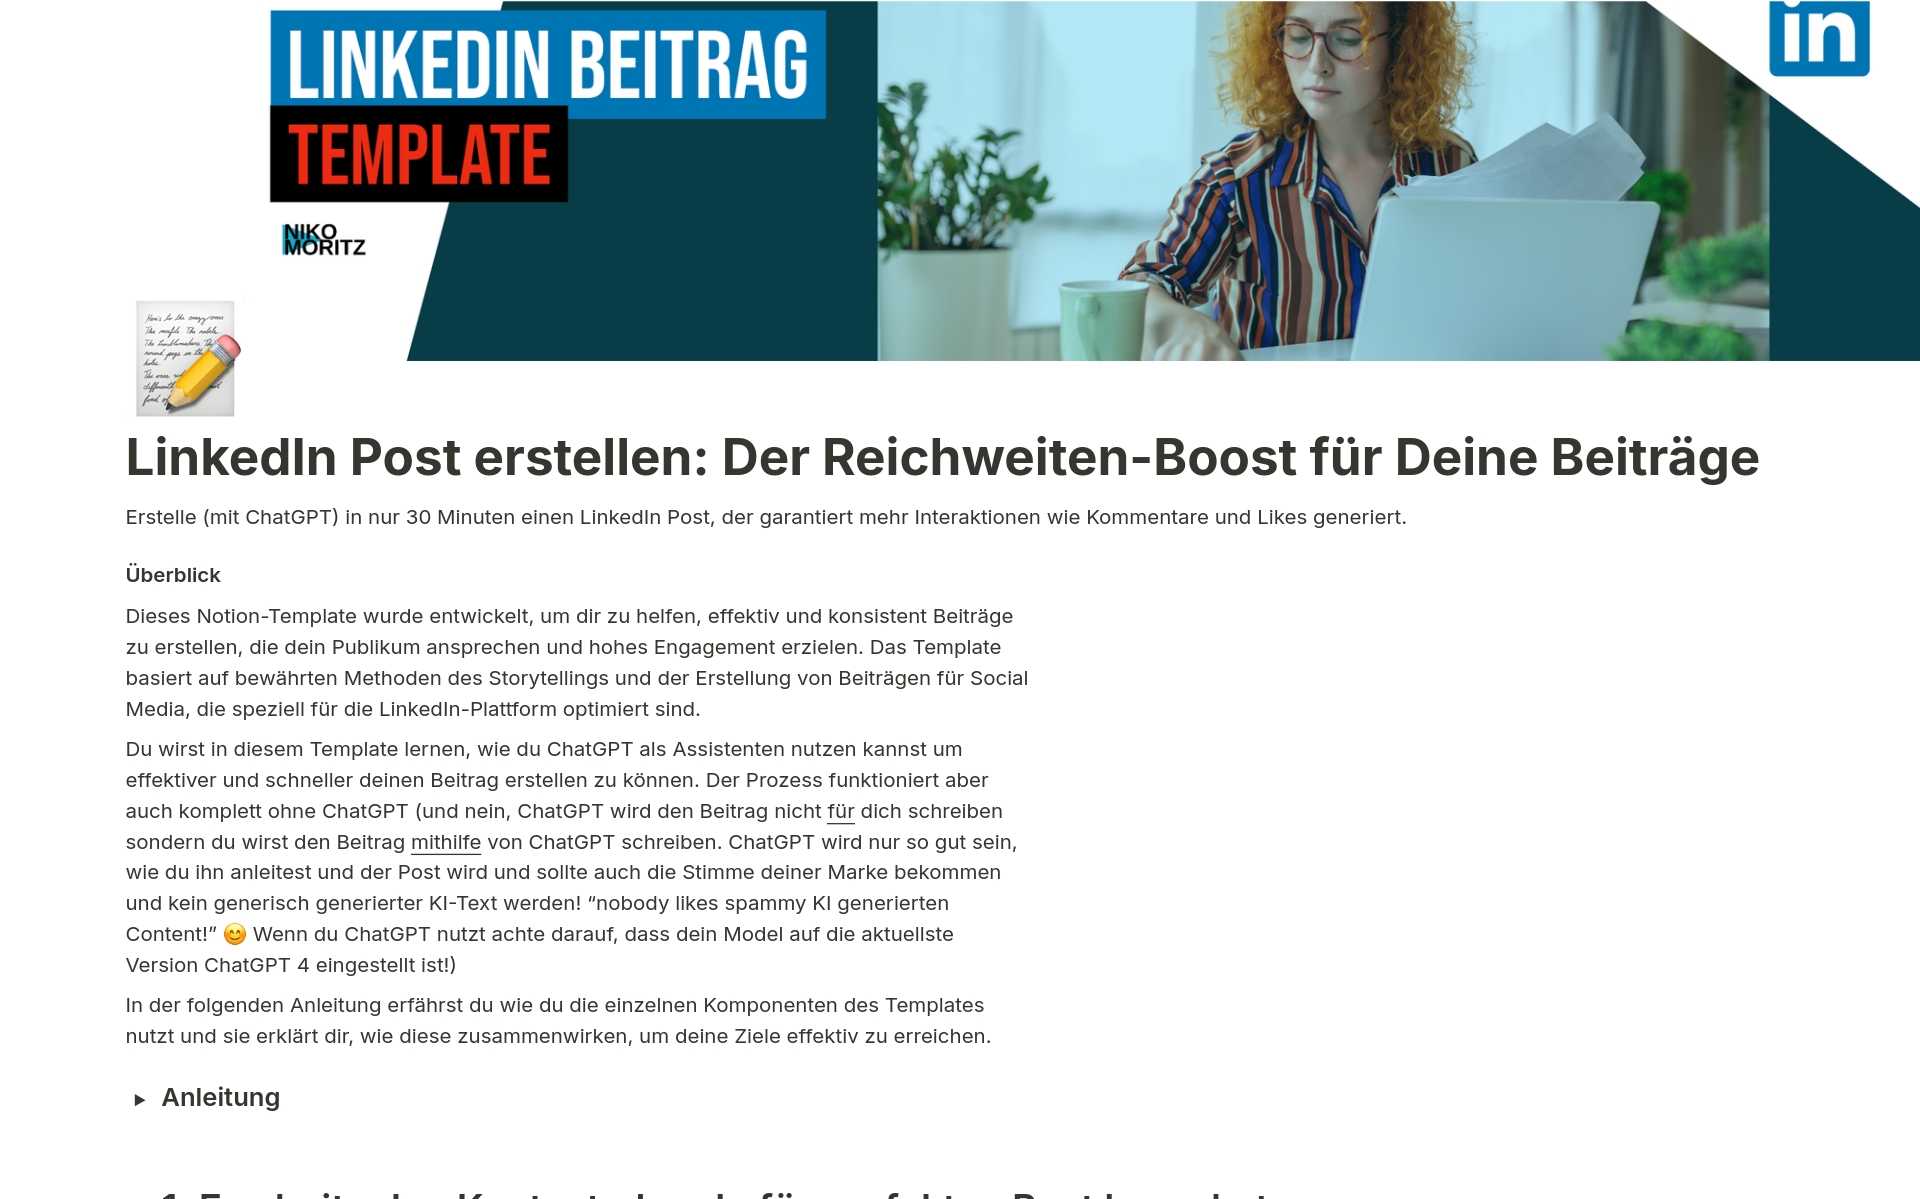 Vista previa de una plantilla para LinkedIn Post Reichweiten Boost